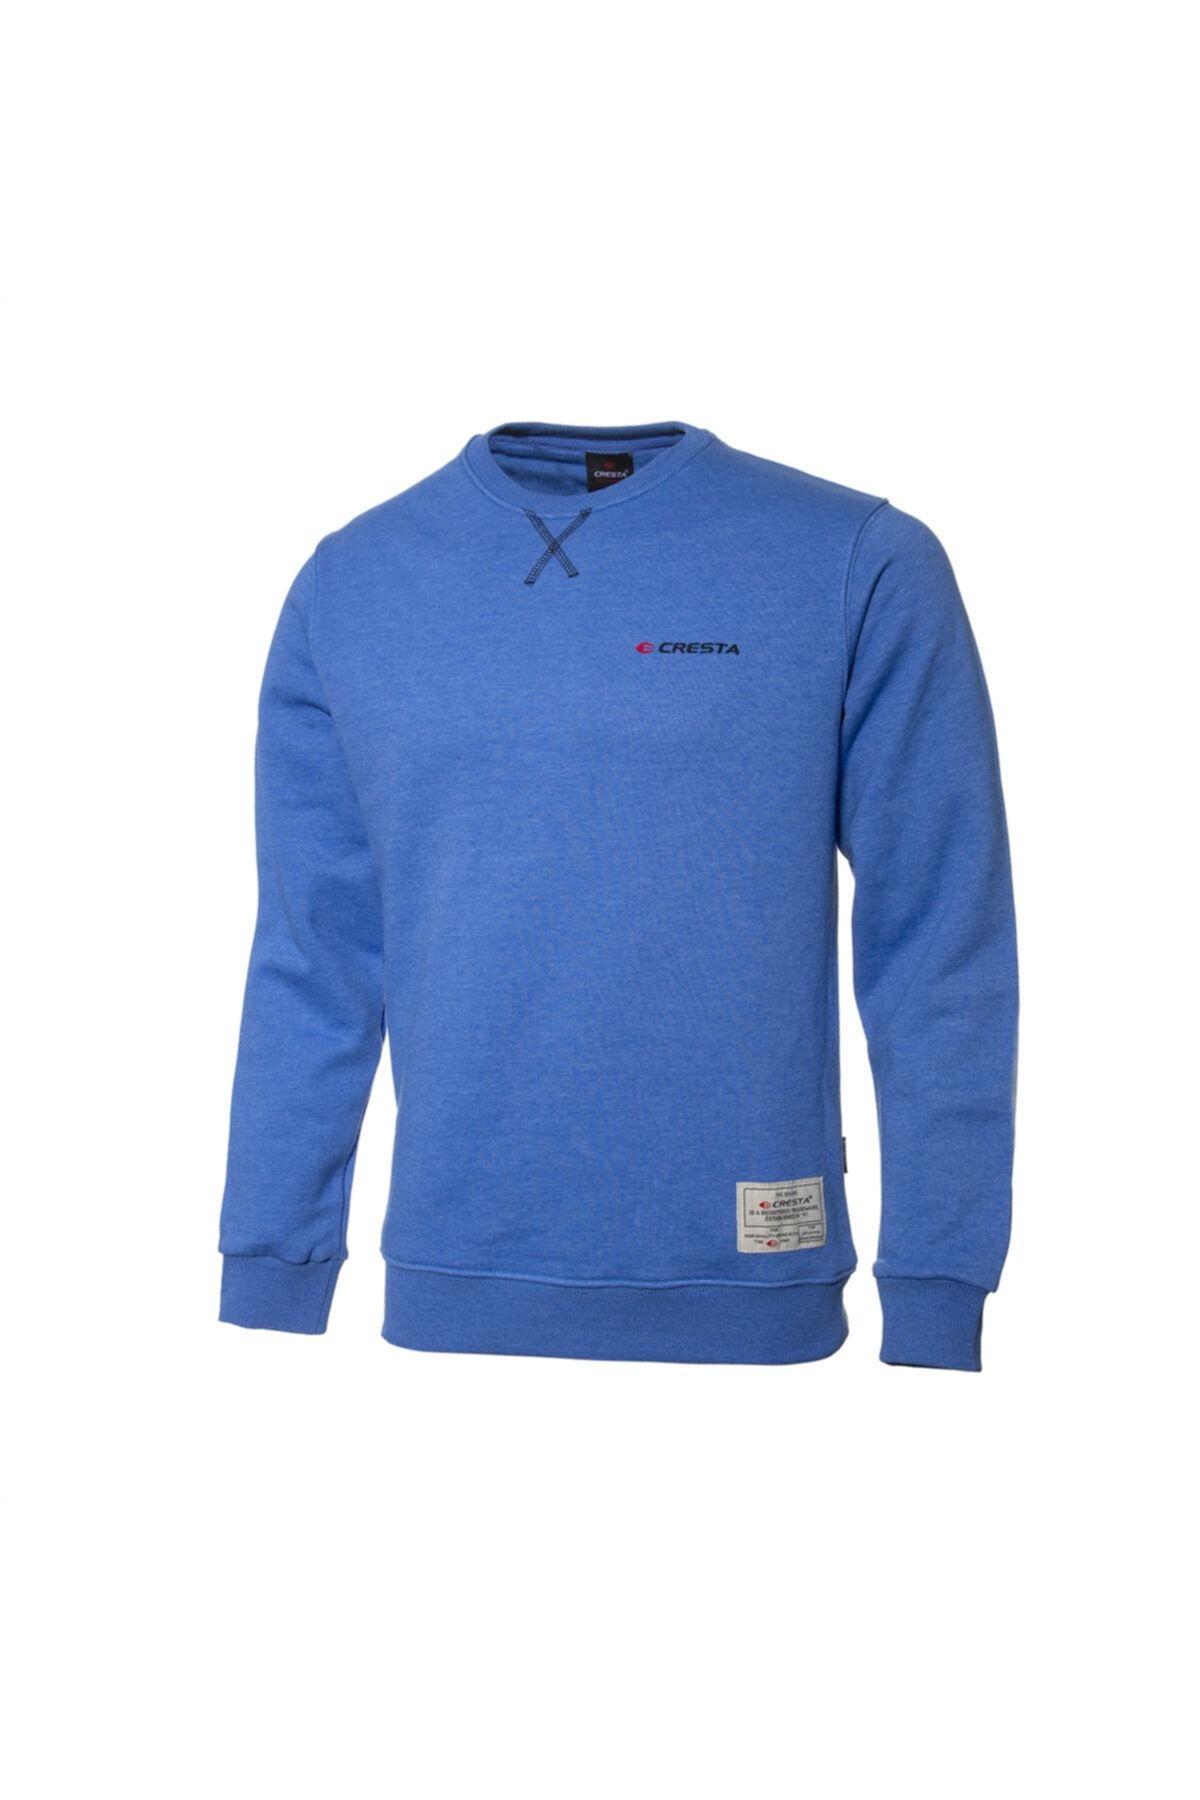 Cresta Erkek Mavi Basic Sweatshirt